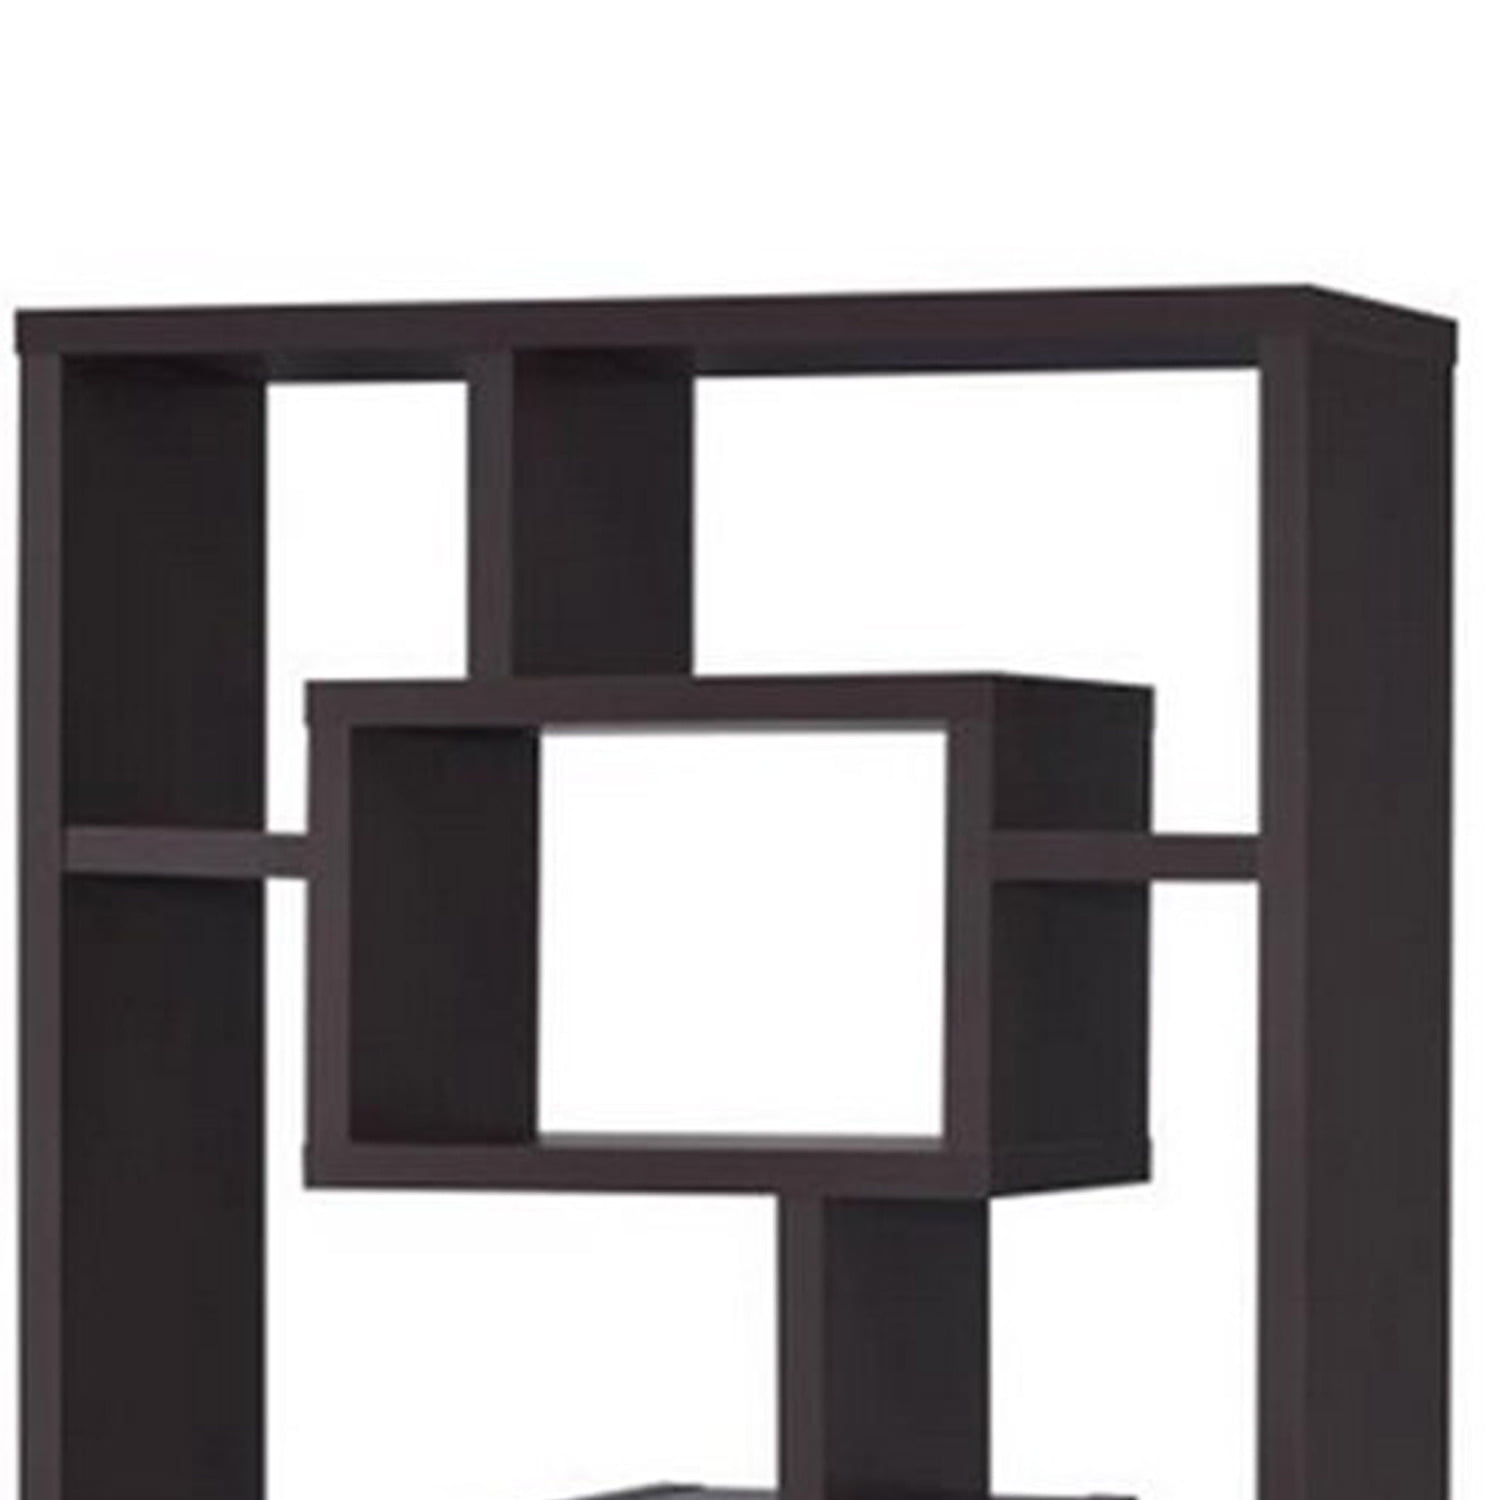 Picture of Benzara BM156231 70.75 x 35.5 x 11.5 in. Aesthetic Fine Looking Rectangular Bookcase, Brown